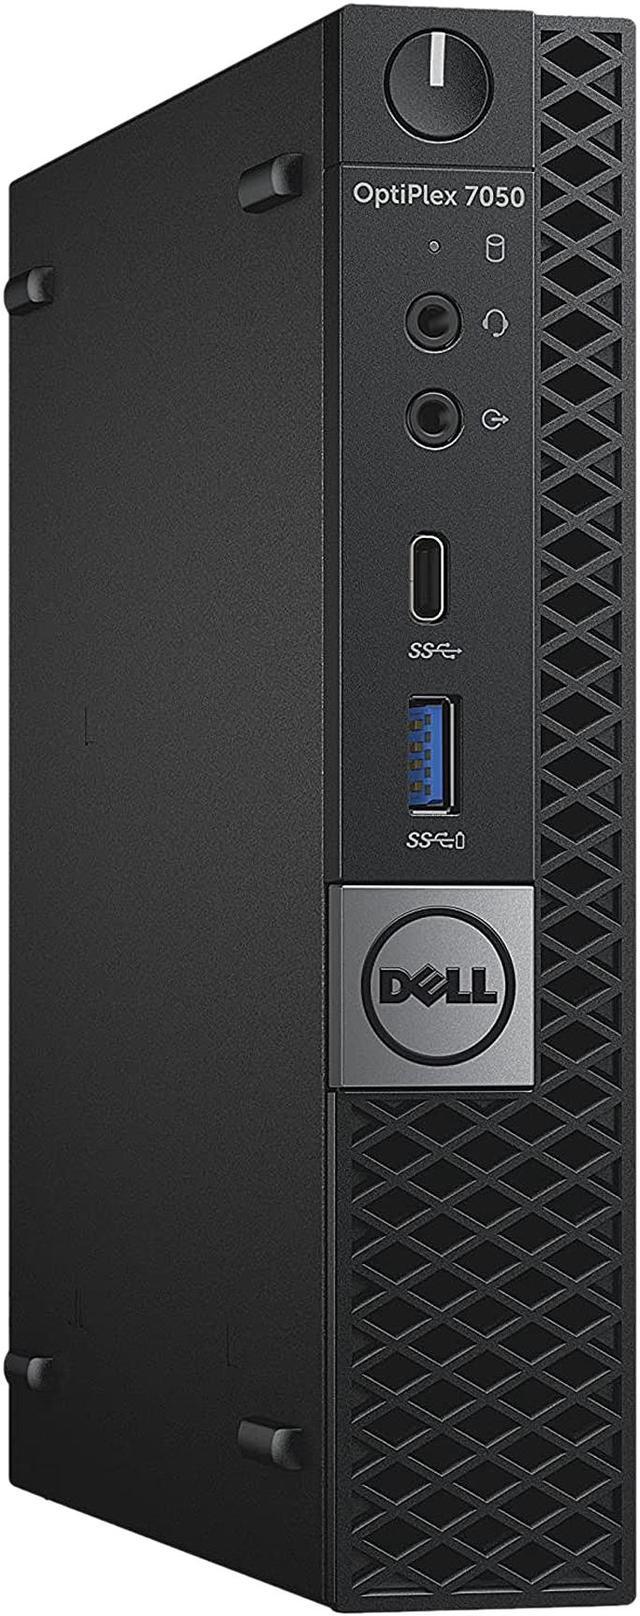  Dell OptiPlex 7050 Tower Desktop Computer, Intel Core